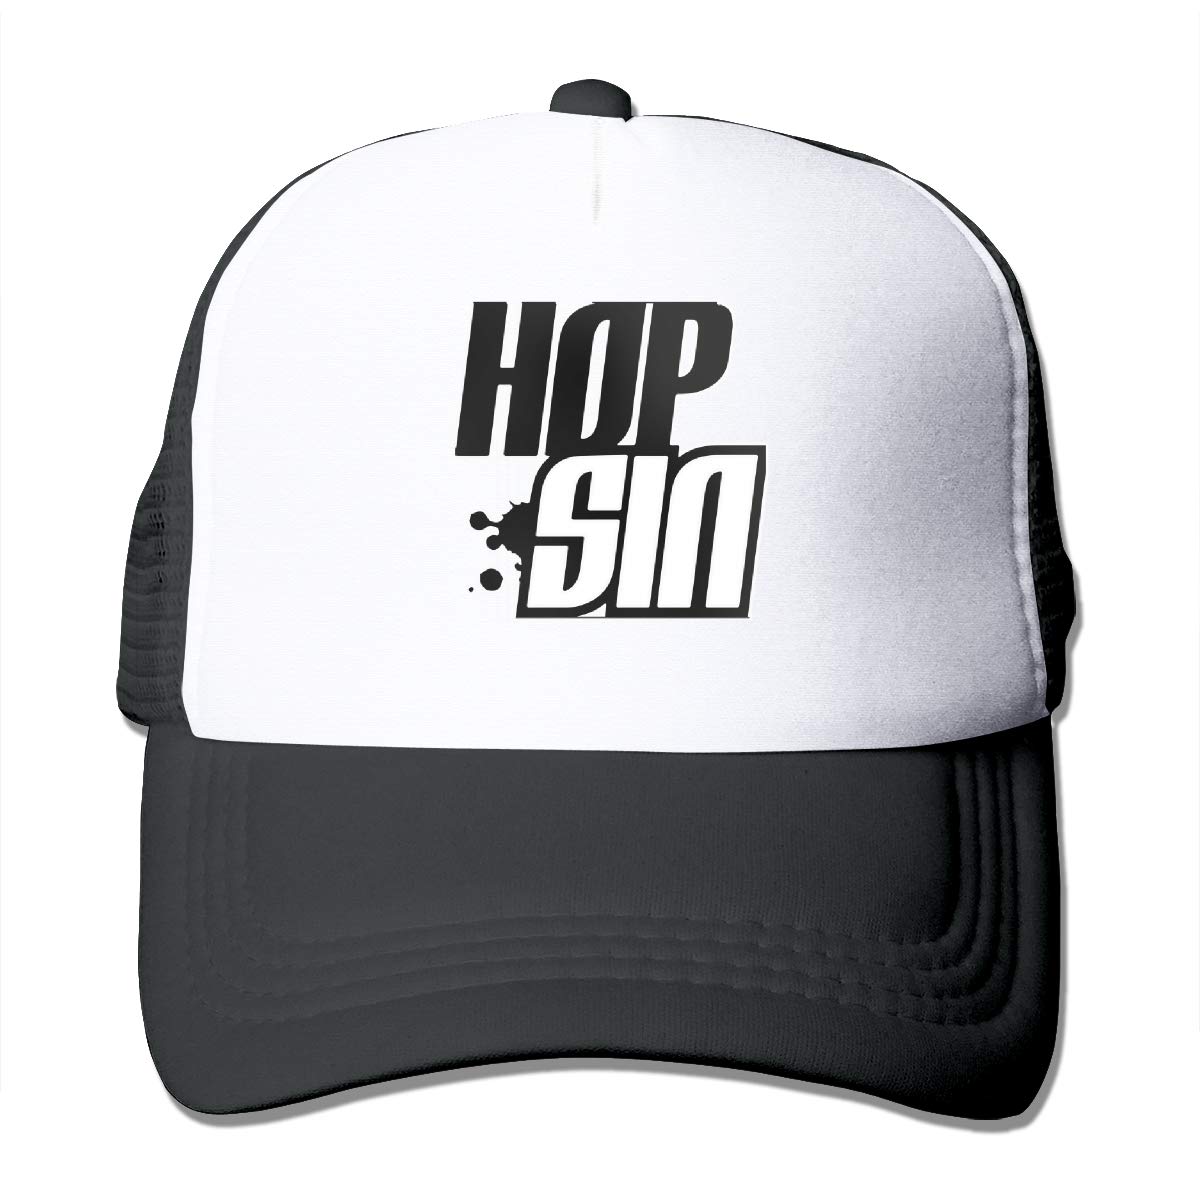 Hopsin Logo - Amazon.com: M Morbo Rapper Hopsin Logo Unisex Adult Snapback ...